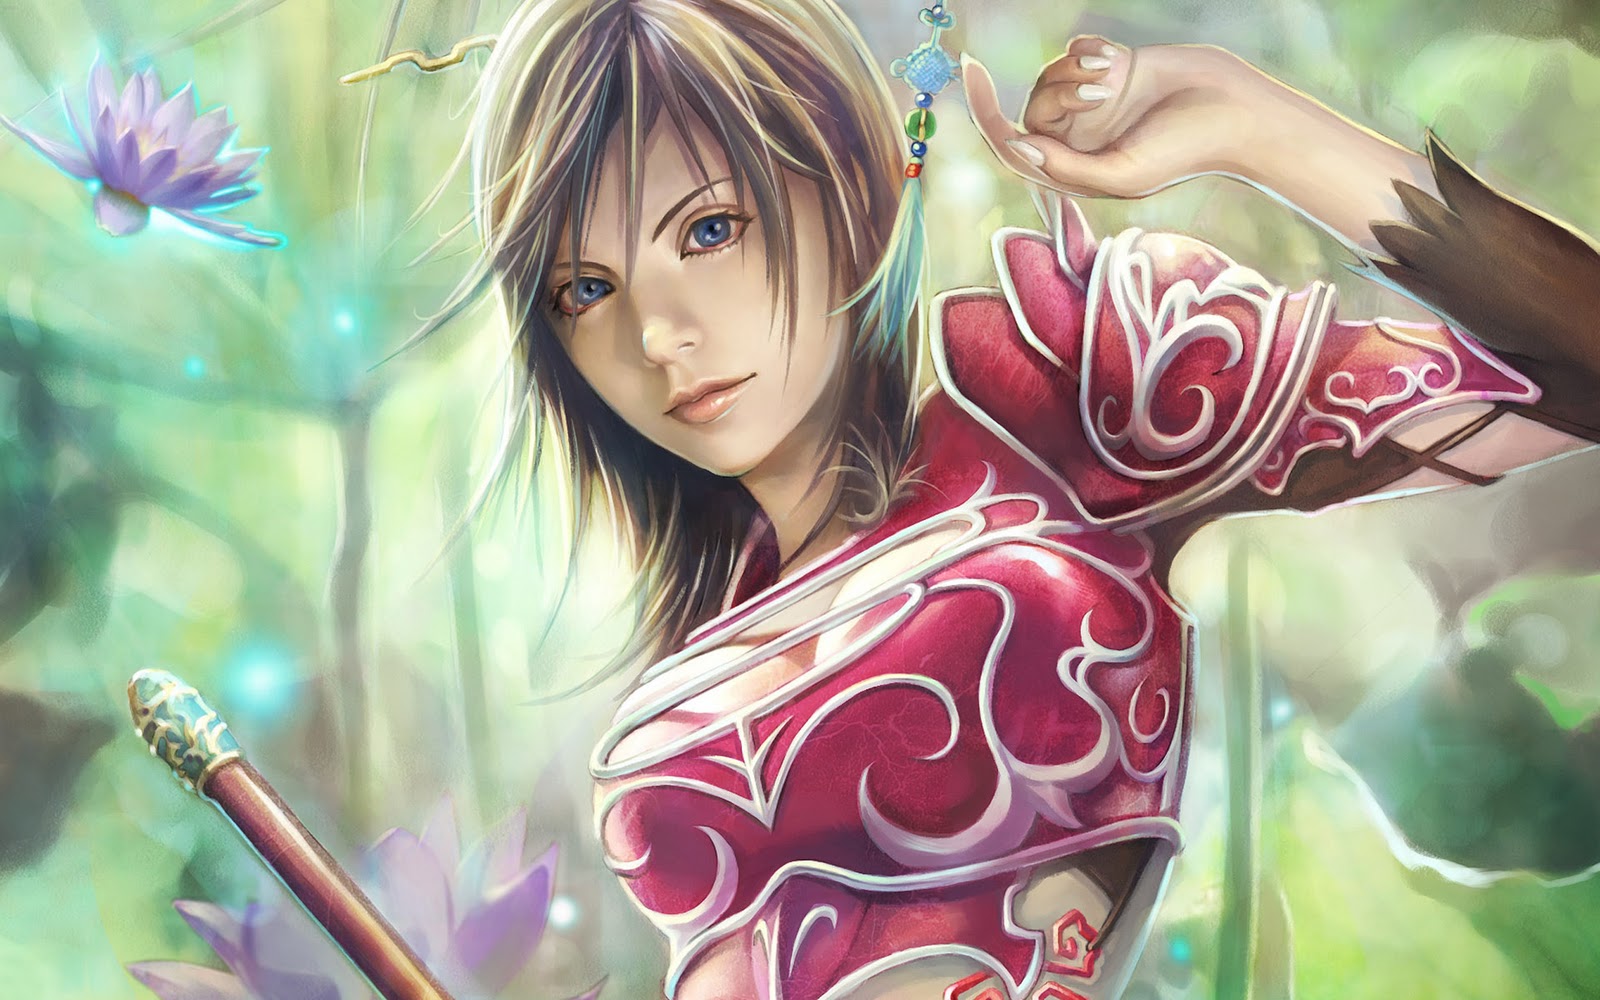 Gorgeous Beauty Female Warrior Anime Girl Cg Artwork - High Quality Anime Art - HD Wallpaper 